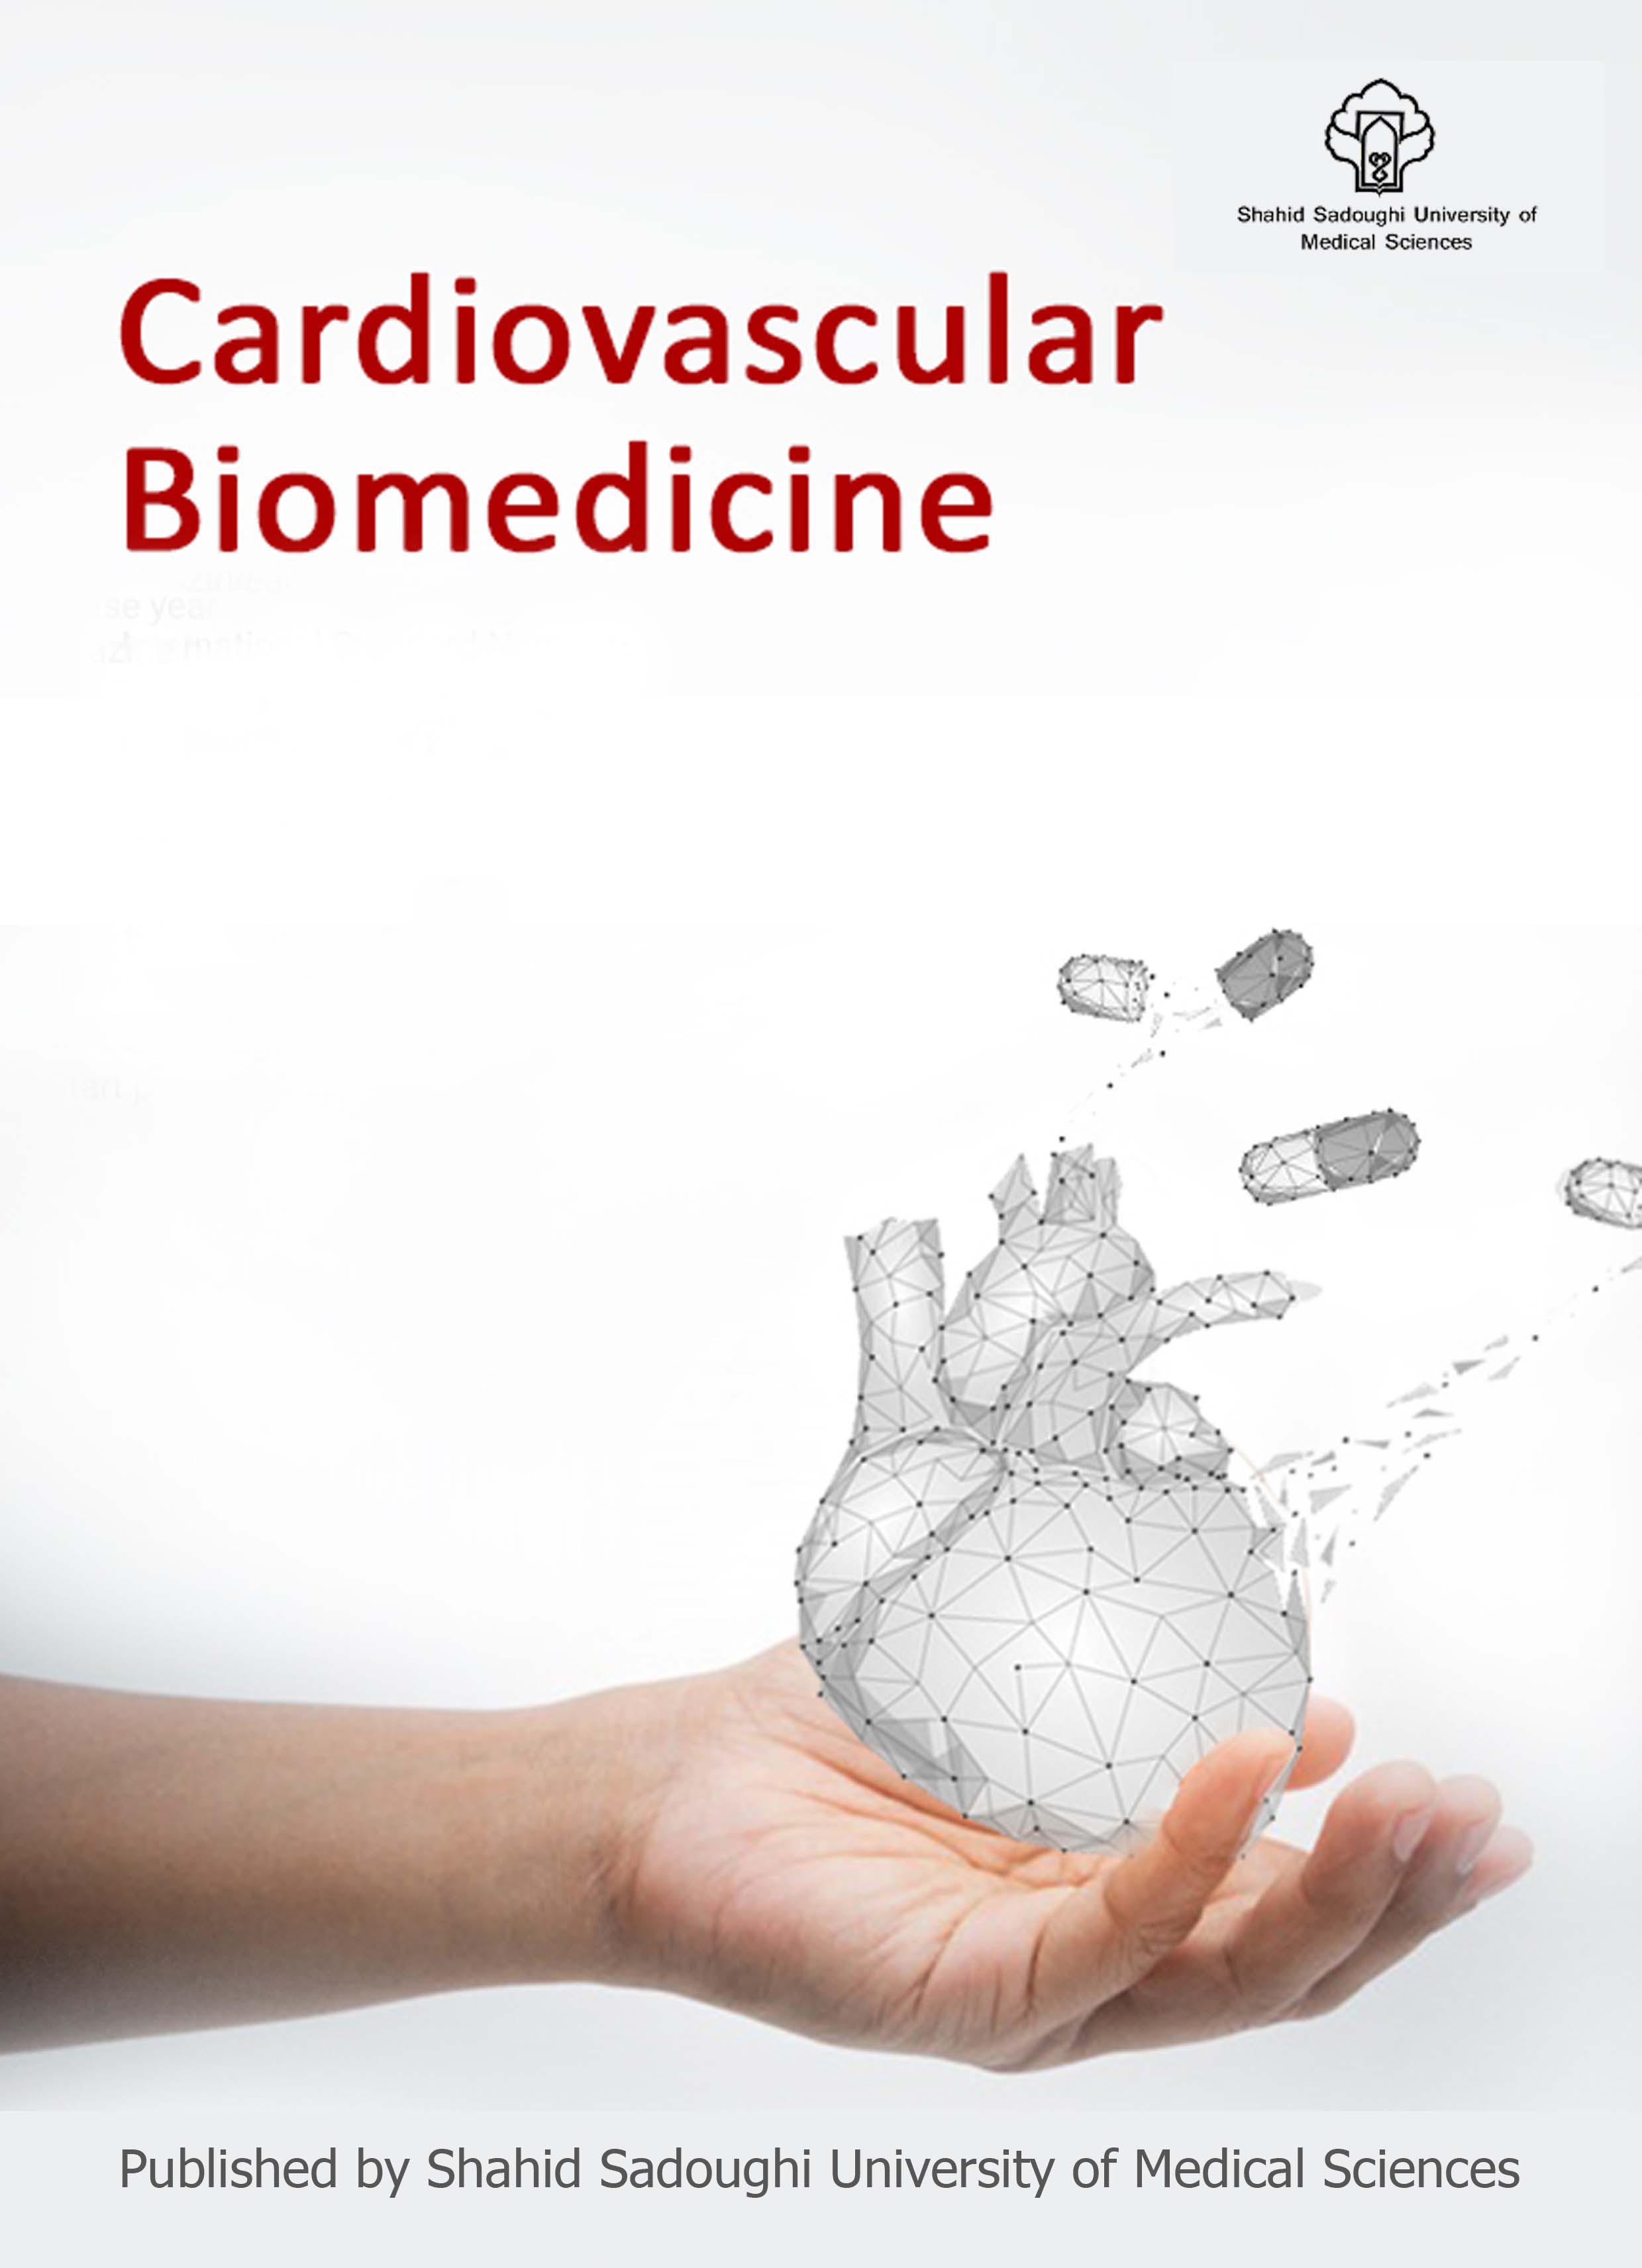 Cardiovascular Biomedicine